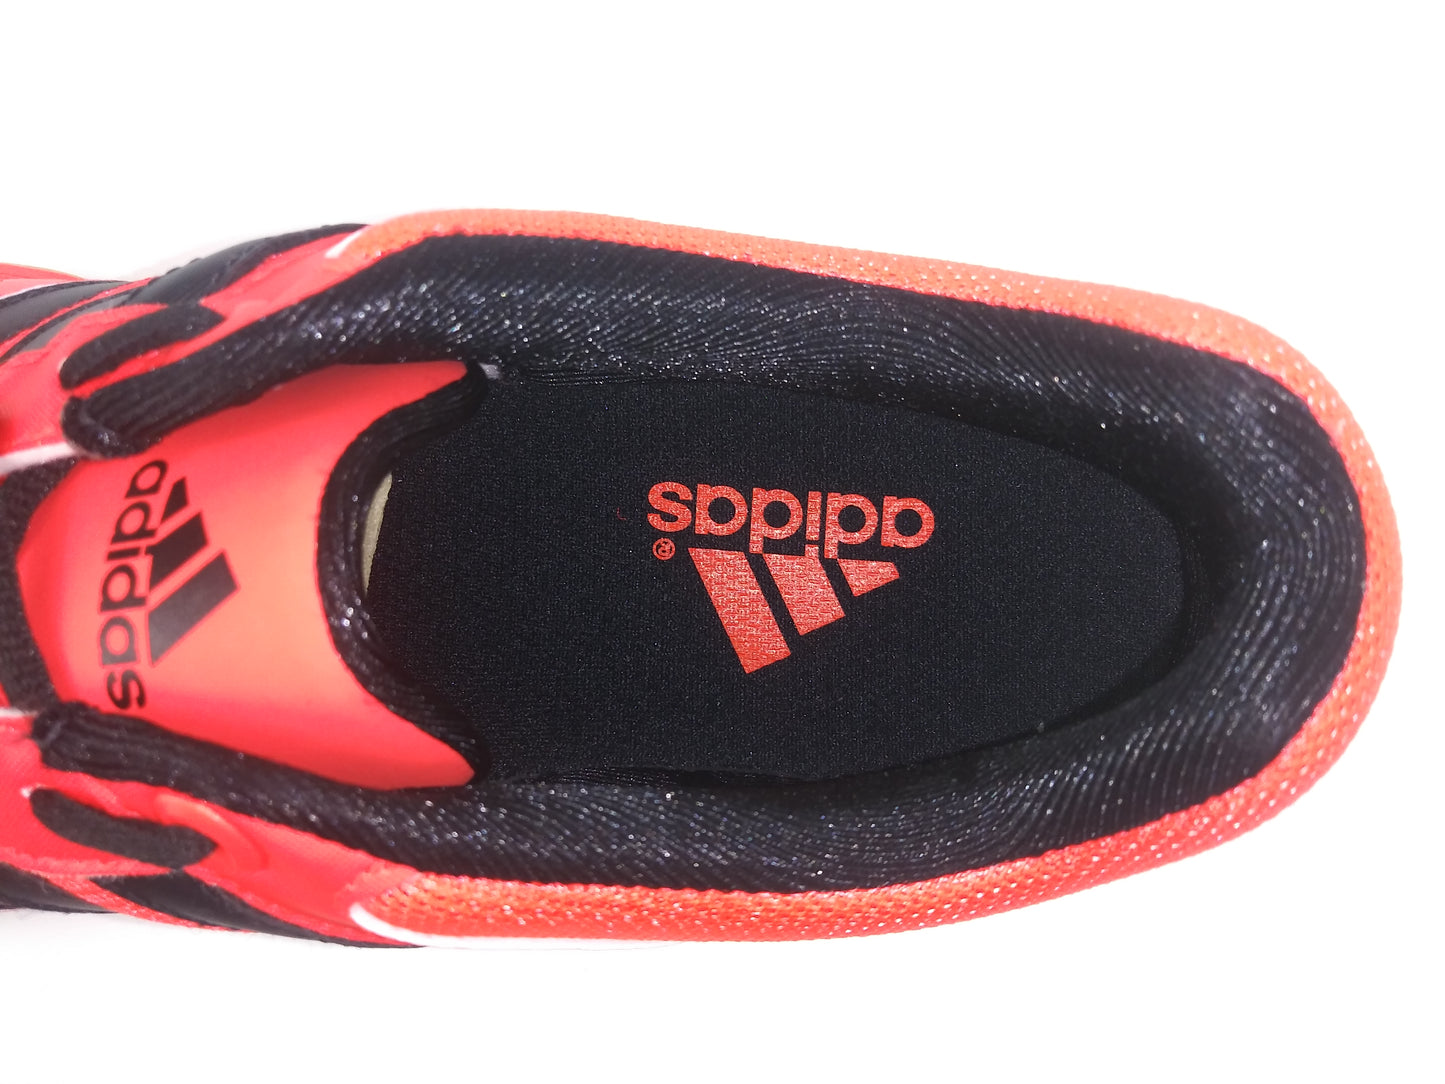 Adidas TopSala X Indoor Shoes Orange Black